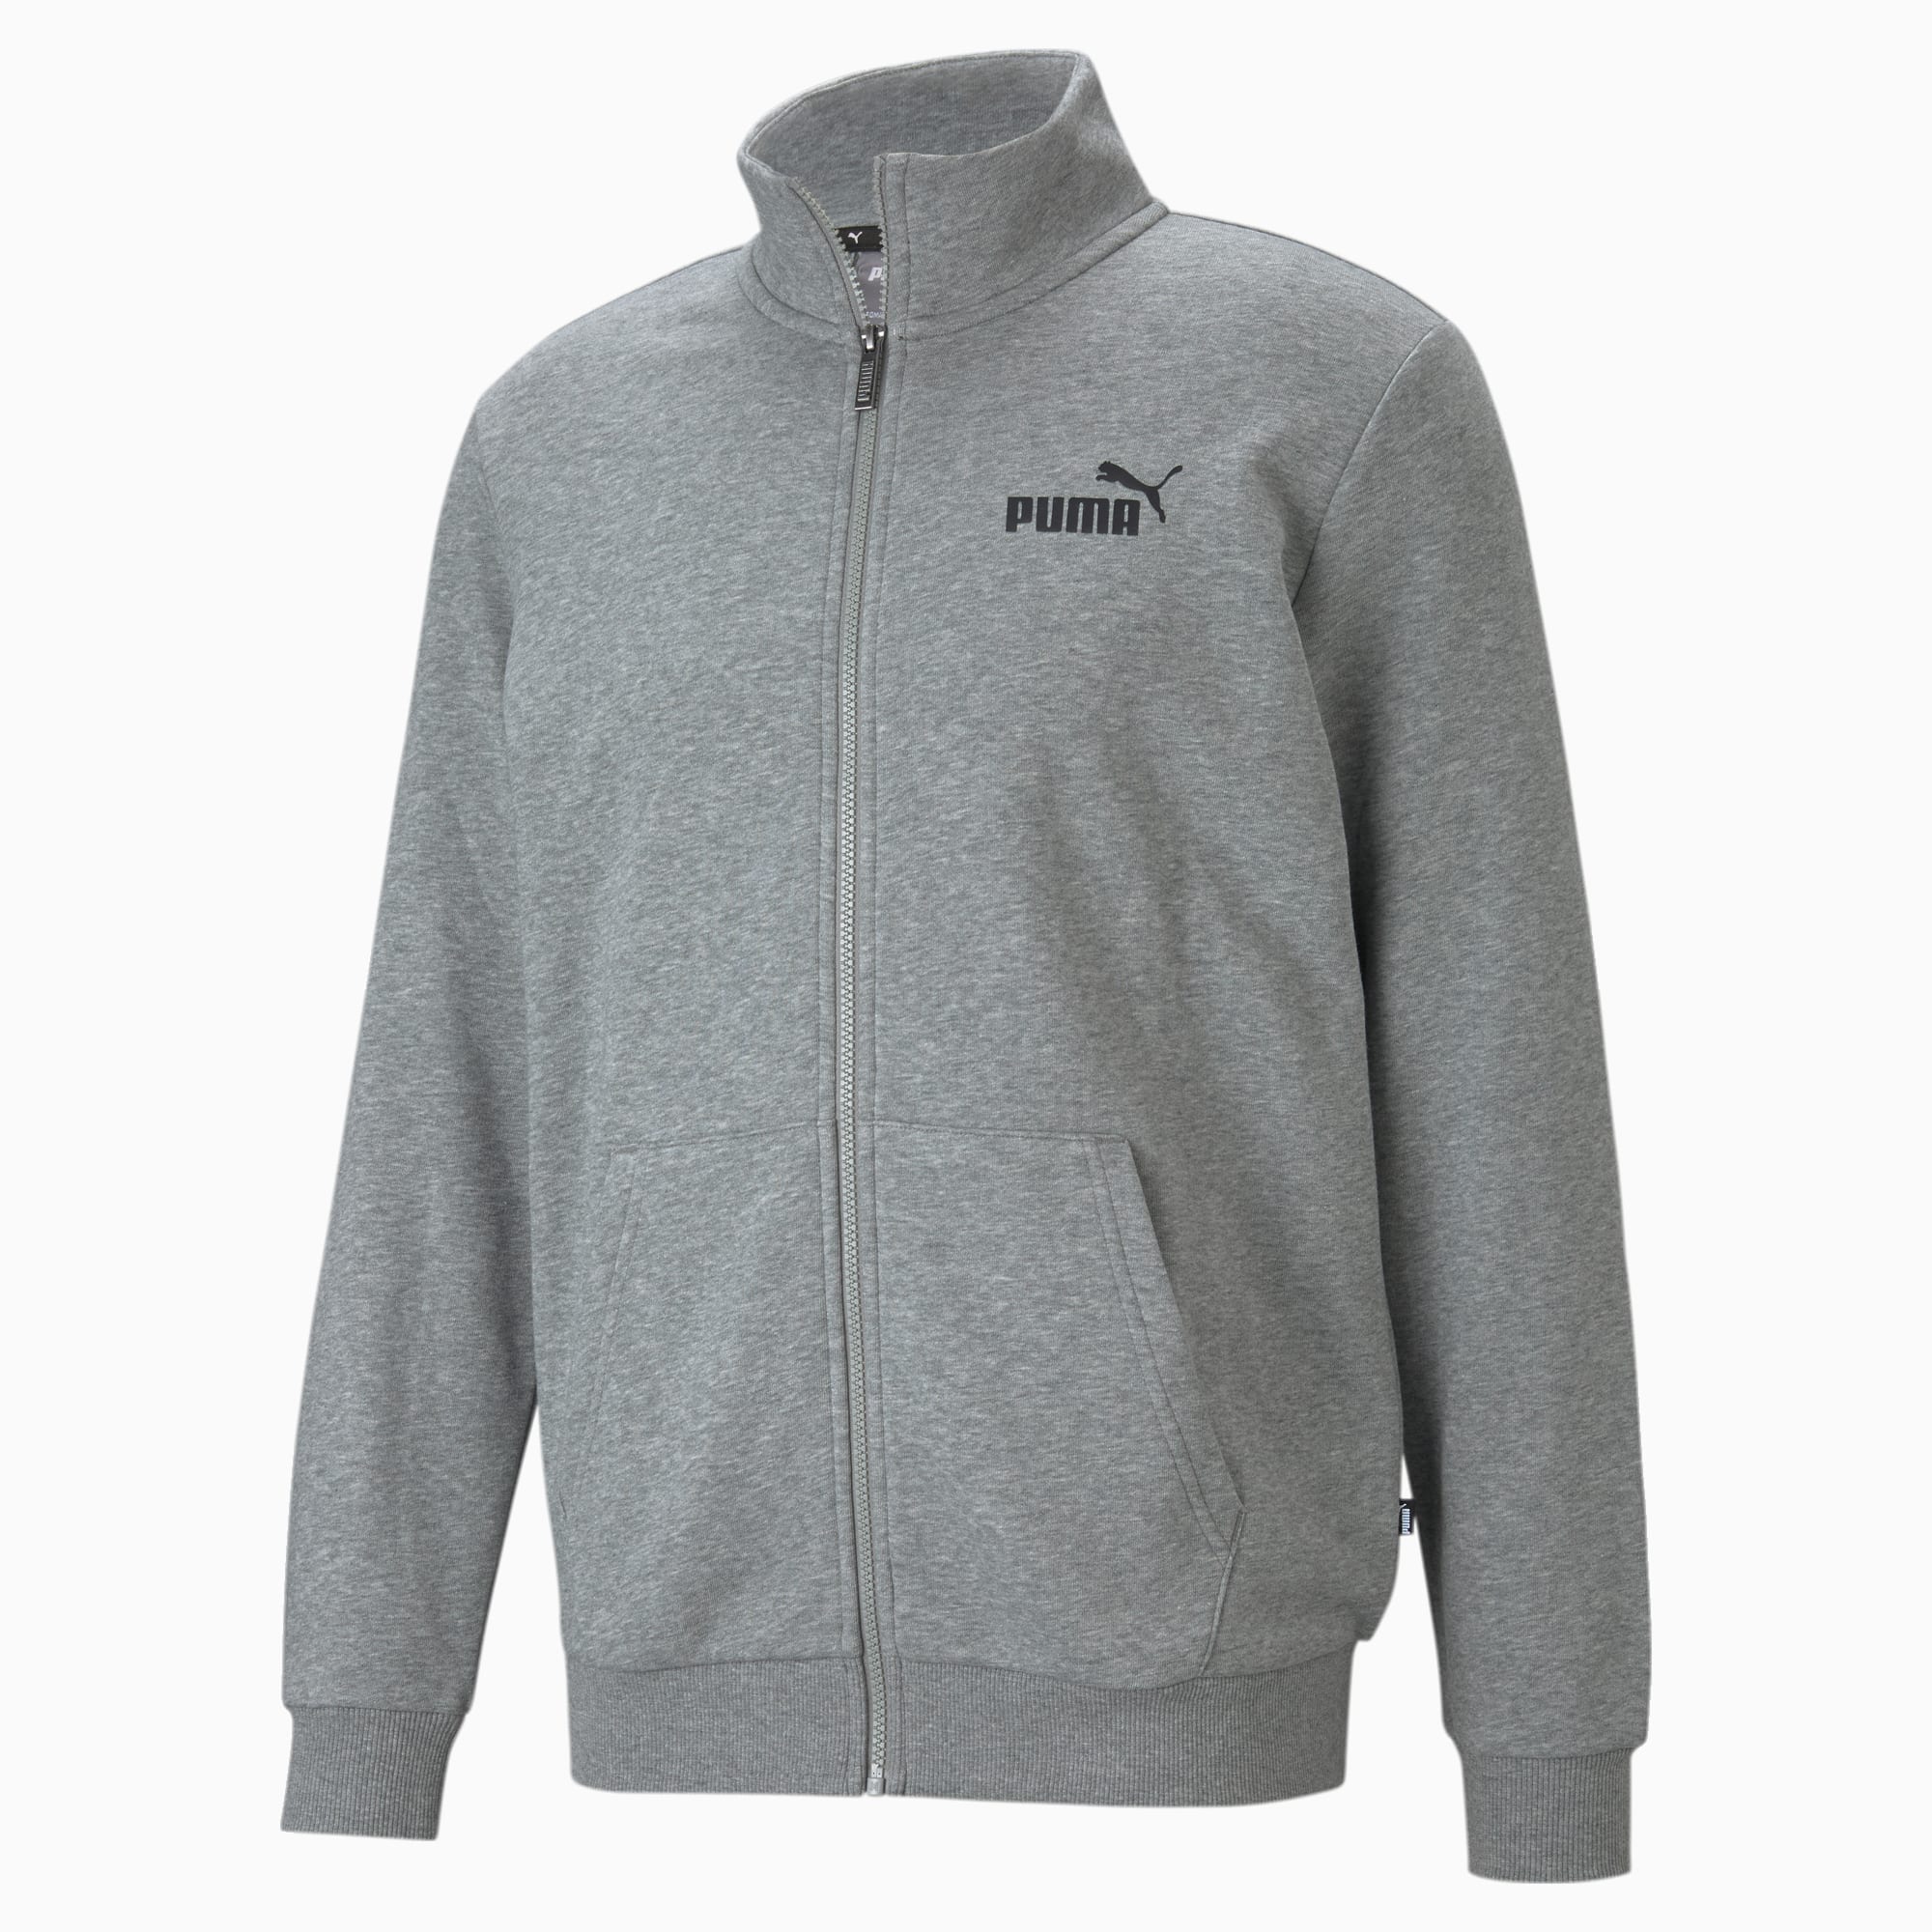 PUMA Essentials Men's Track Jacket, Medium Grey Heather, Size L, Clothing